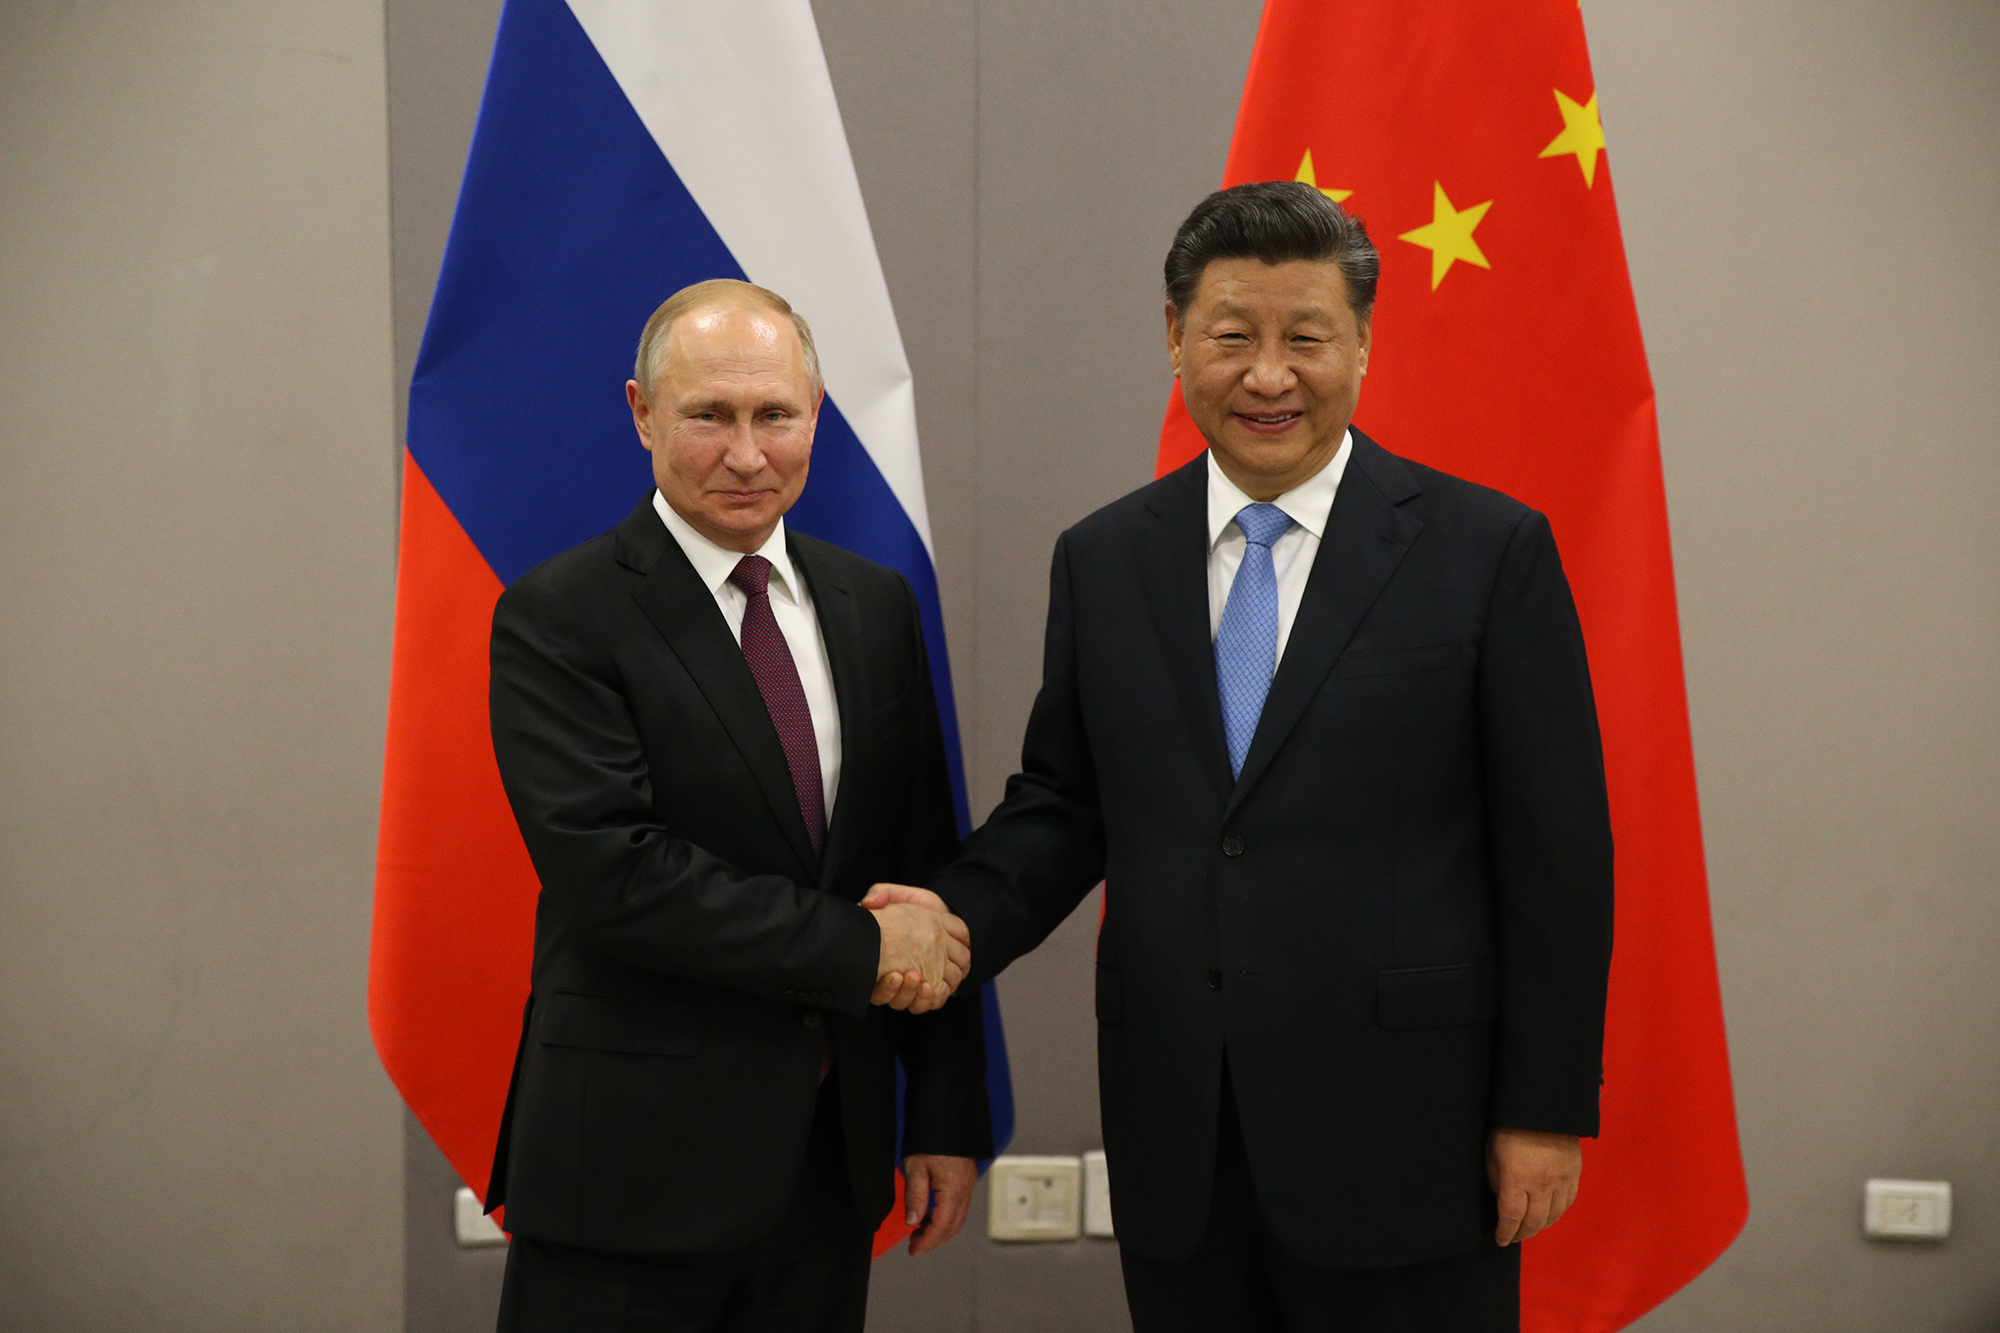 Russian President Vladimir Putin, left, greets Chinese President Xi Jinping during their bilateral meeting on November 13, 2019 in Brasilia, Brazil. 